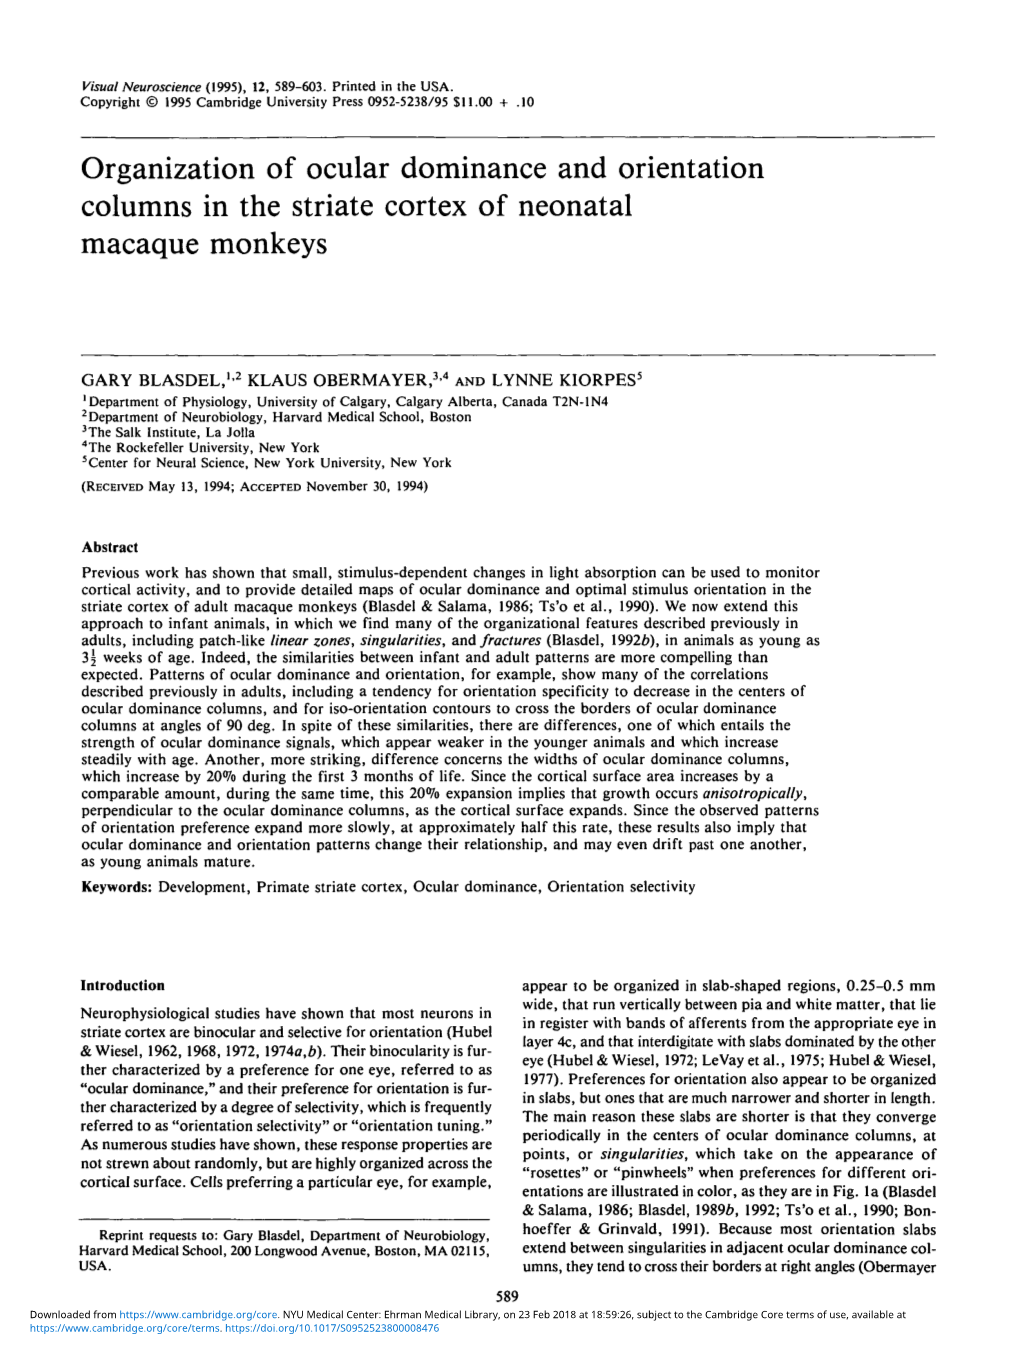 Organization of Ocular Dominance and Orientation Columns in the Striate Cortex of Neonatal Macaque Monkeys